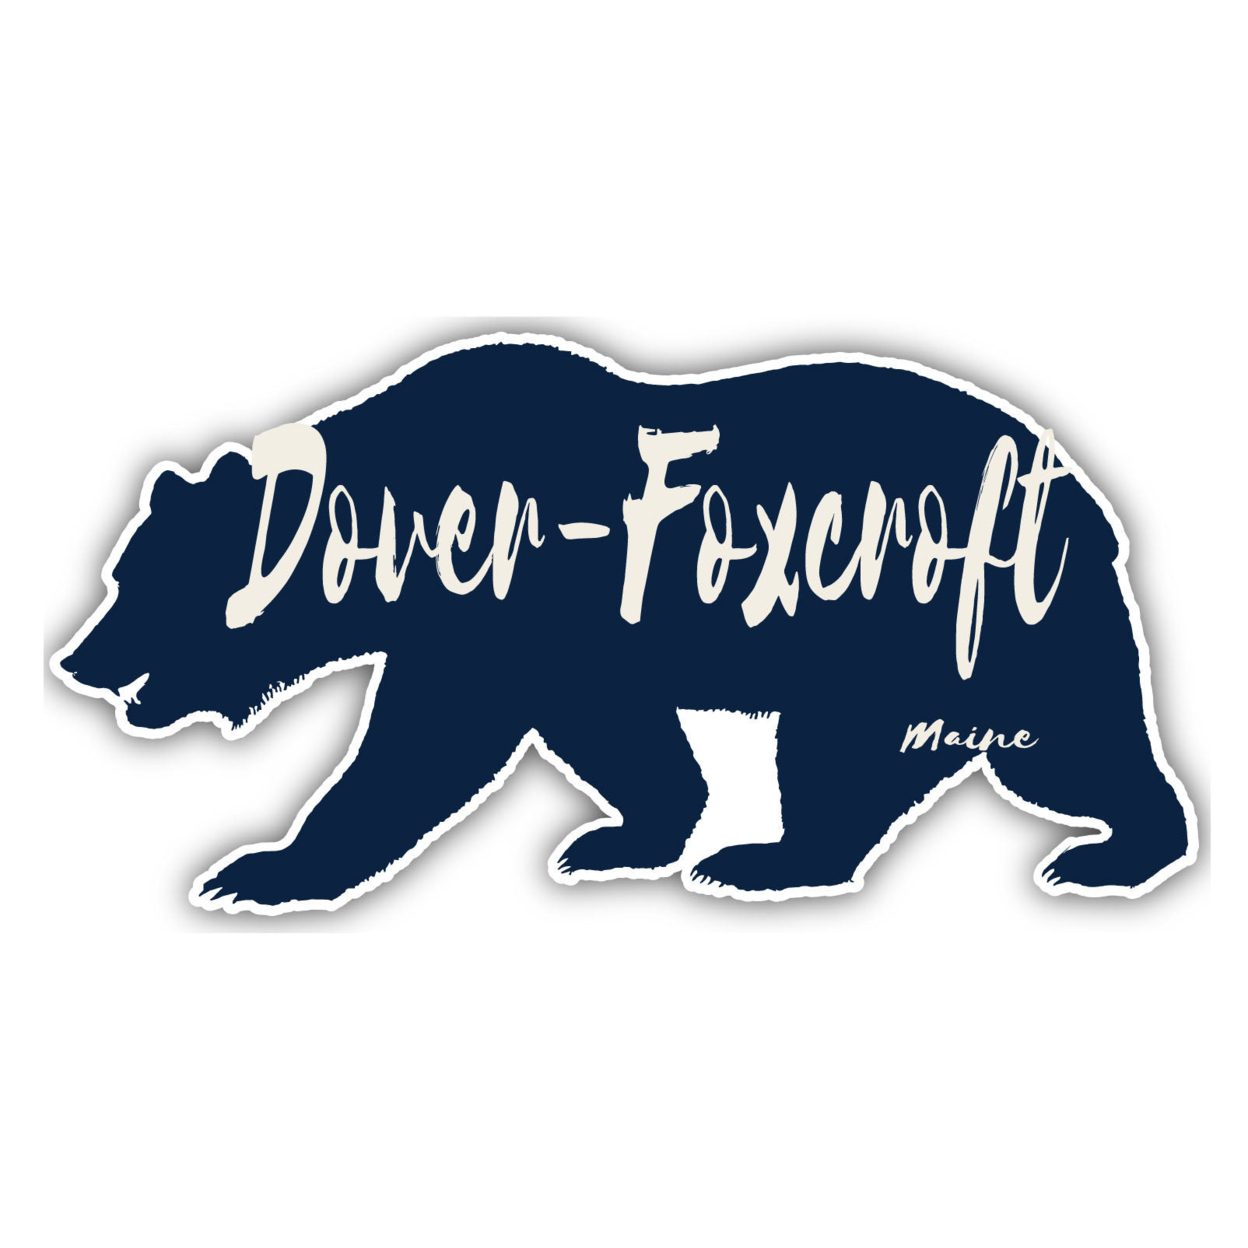 Dover-Foxcroft Maine Souvenir Decorative Stickers (Choose Theme And Size) - Single Unit, 6-Inch, Bear